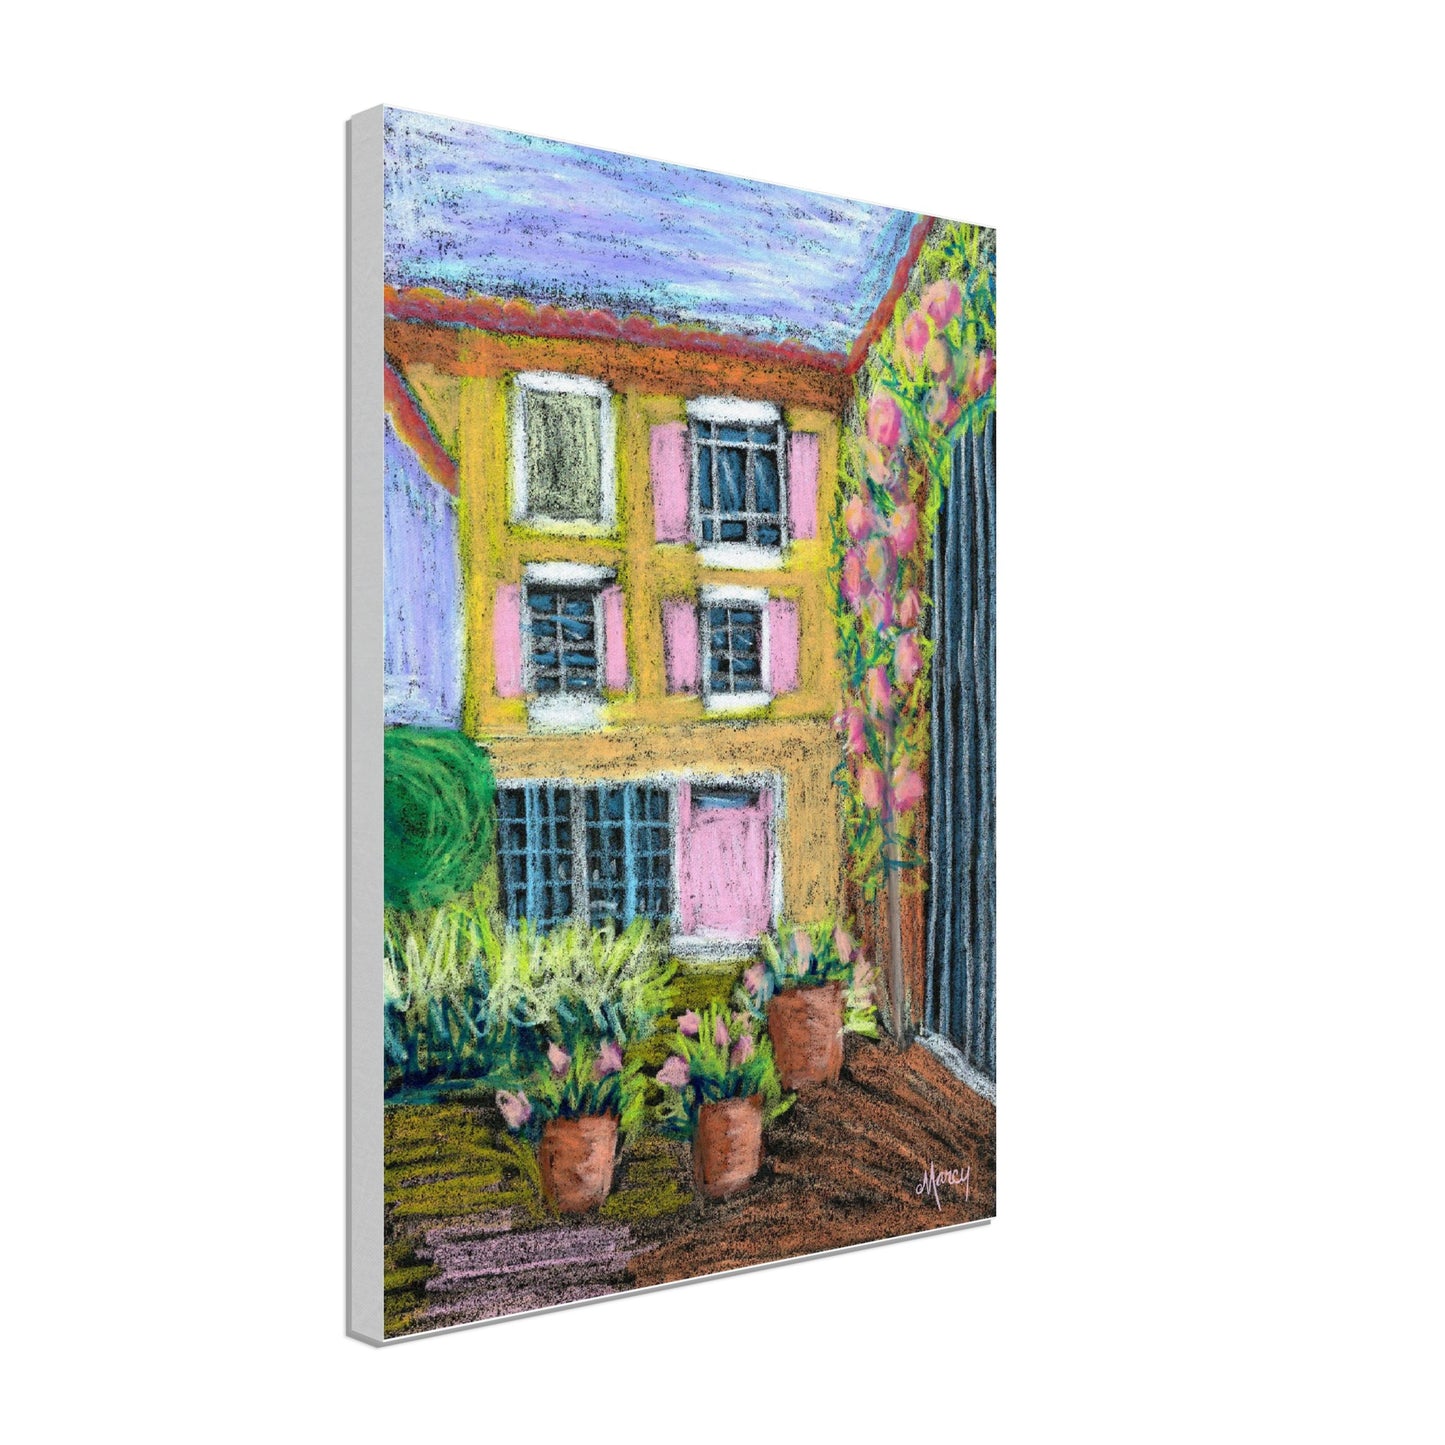 Provence Villa on Canvas Print